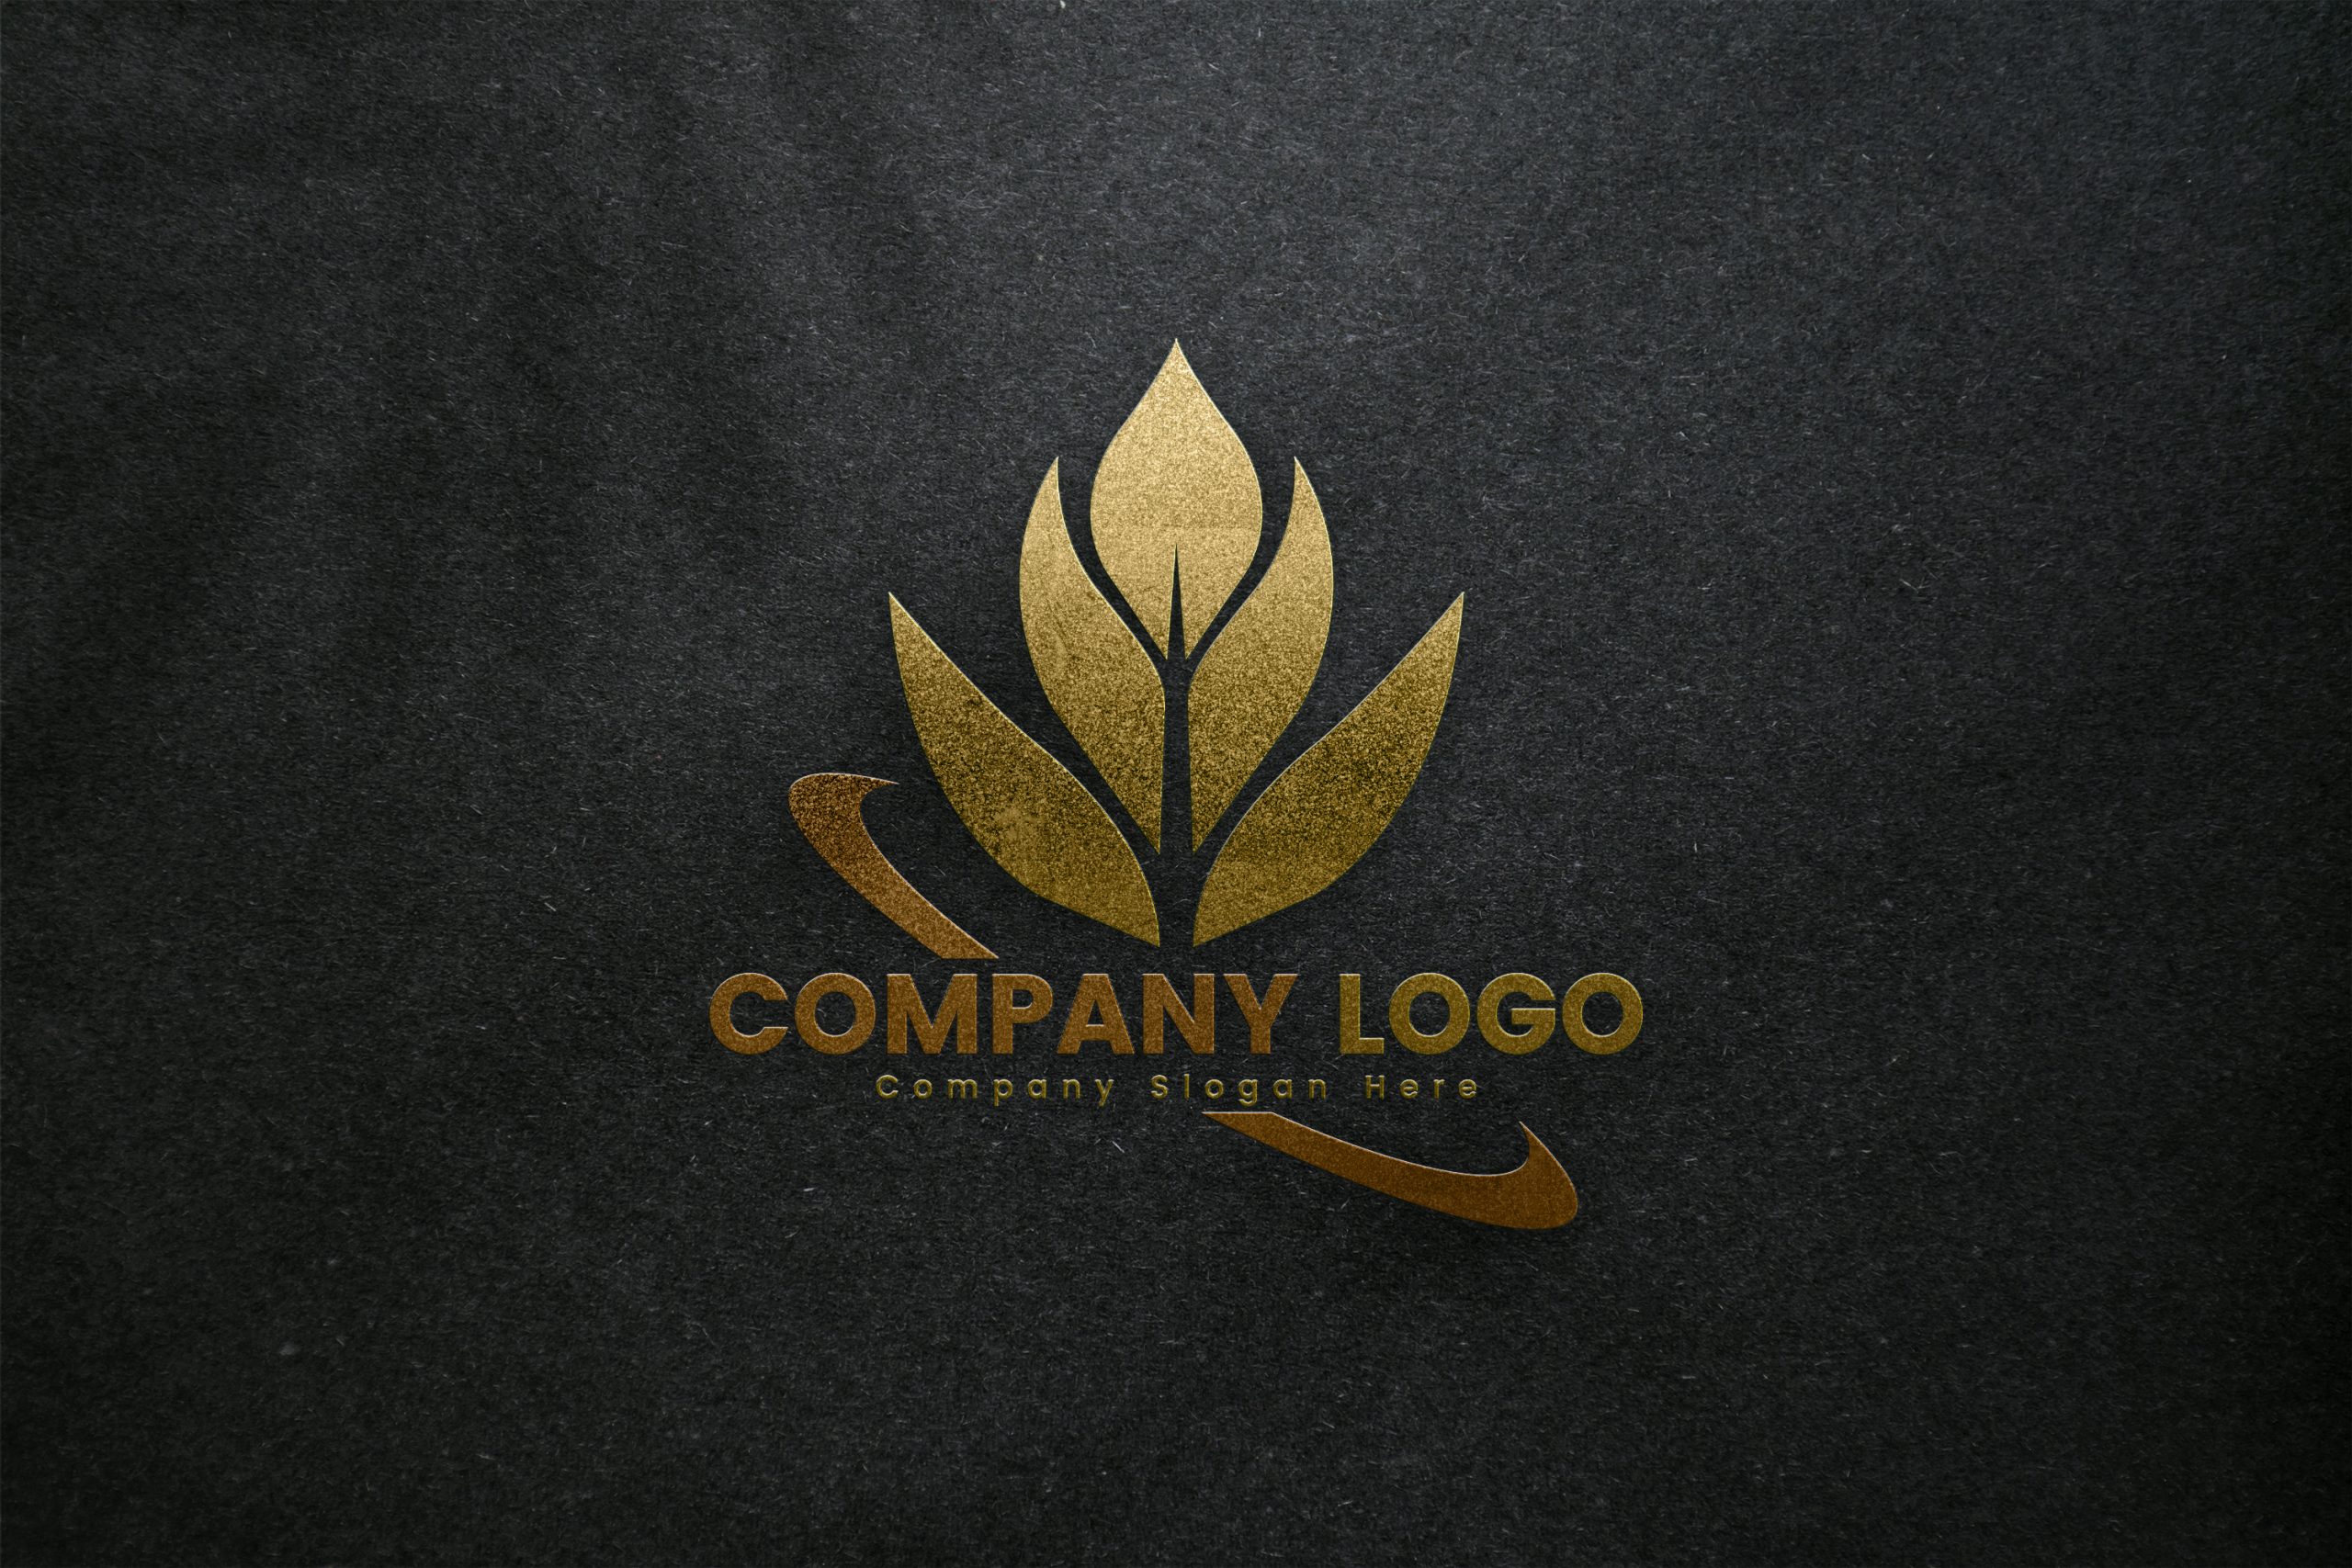 Floral Company Logo Design